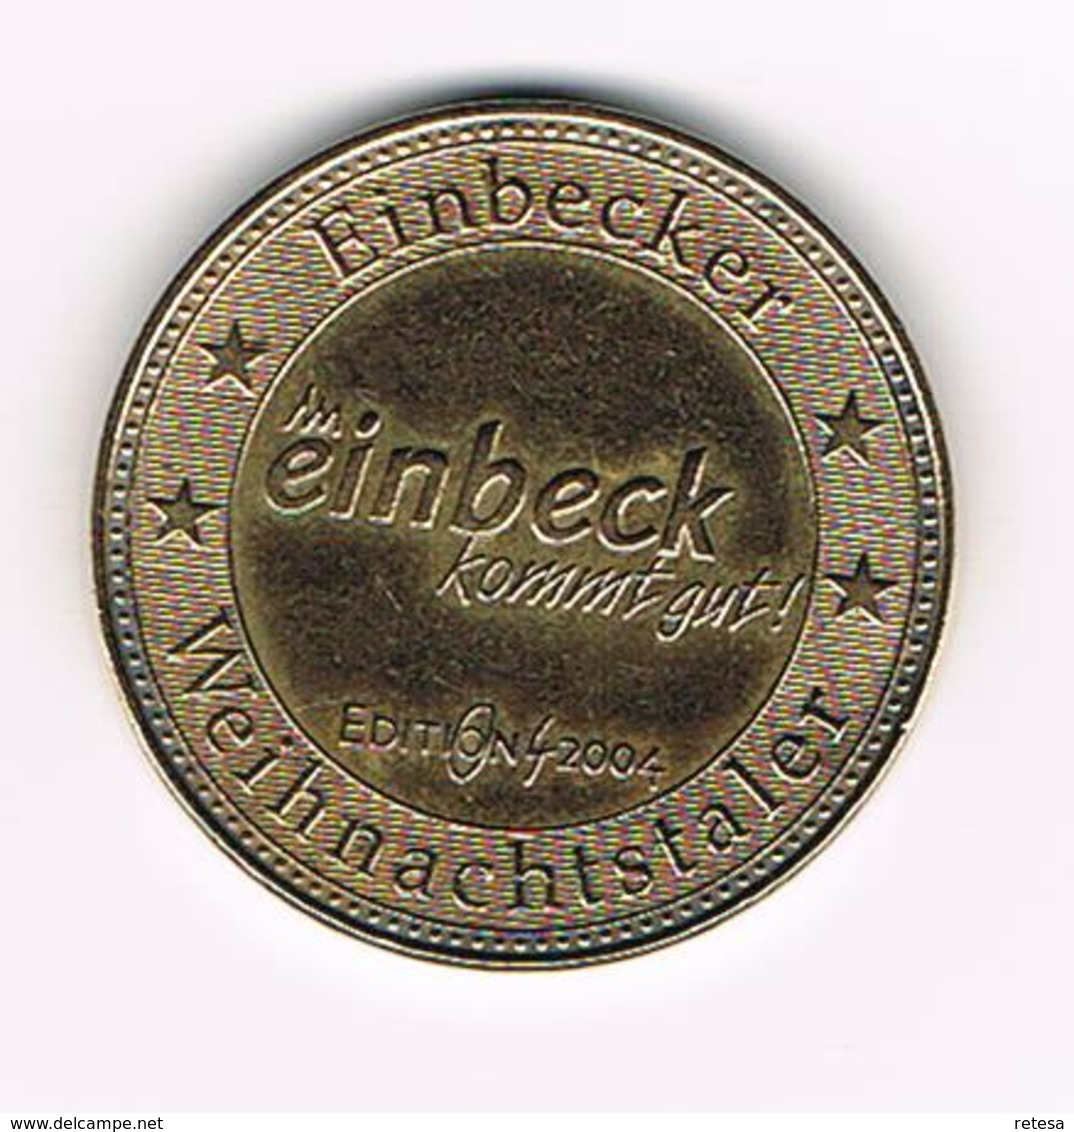 &  PENNING  EINBECKER  WEIHNACHTSTALER  EICKESCHES HAUS 2004 - Monedas Elongadas (elongated Coins)